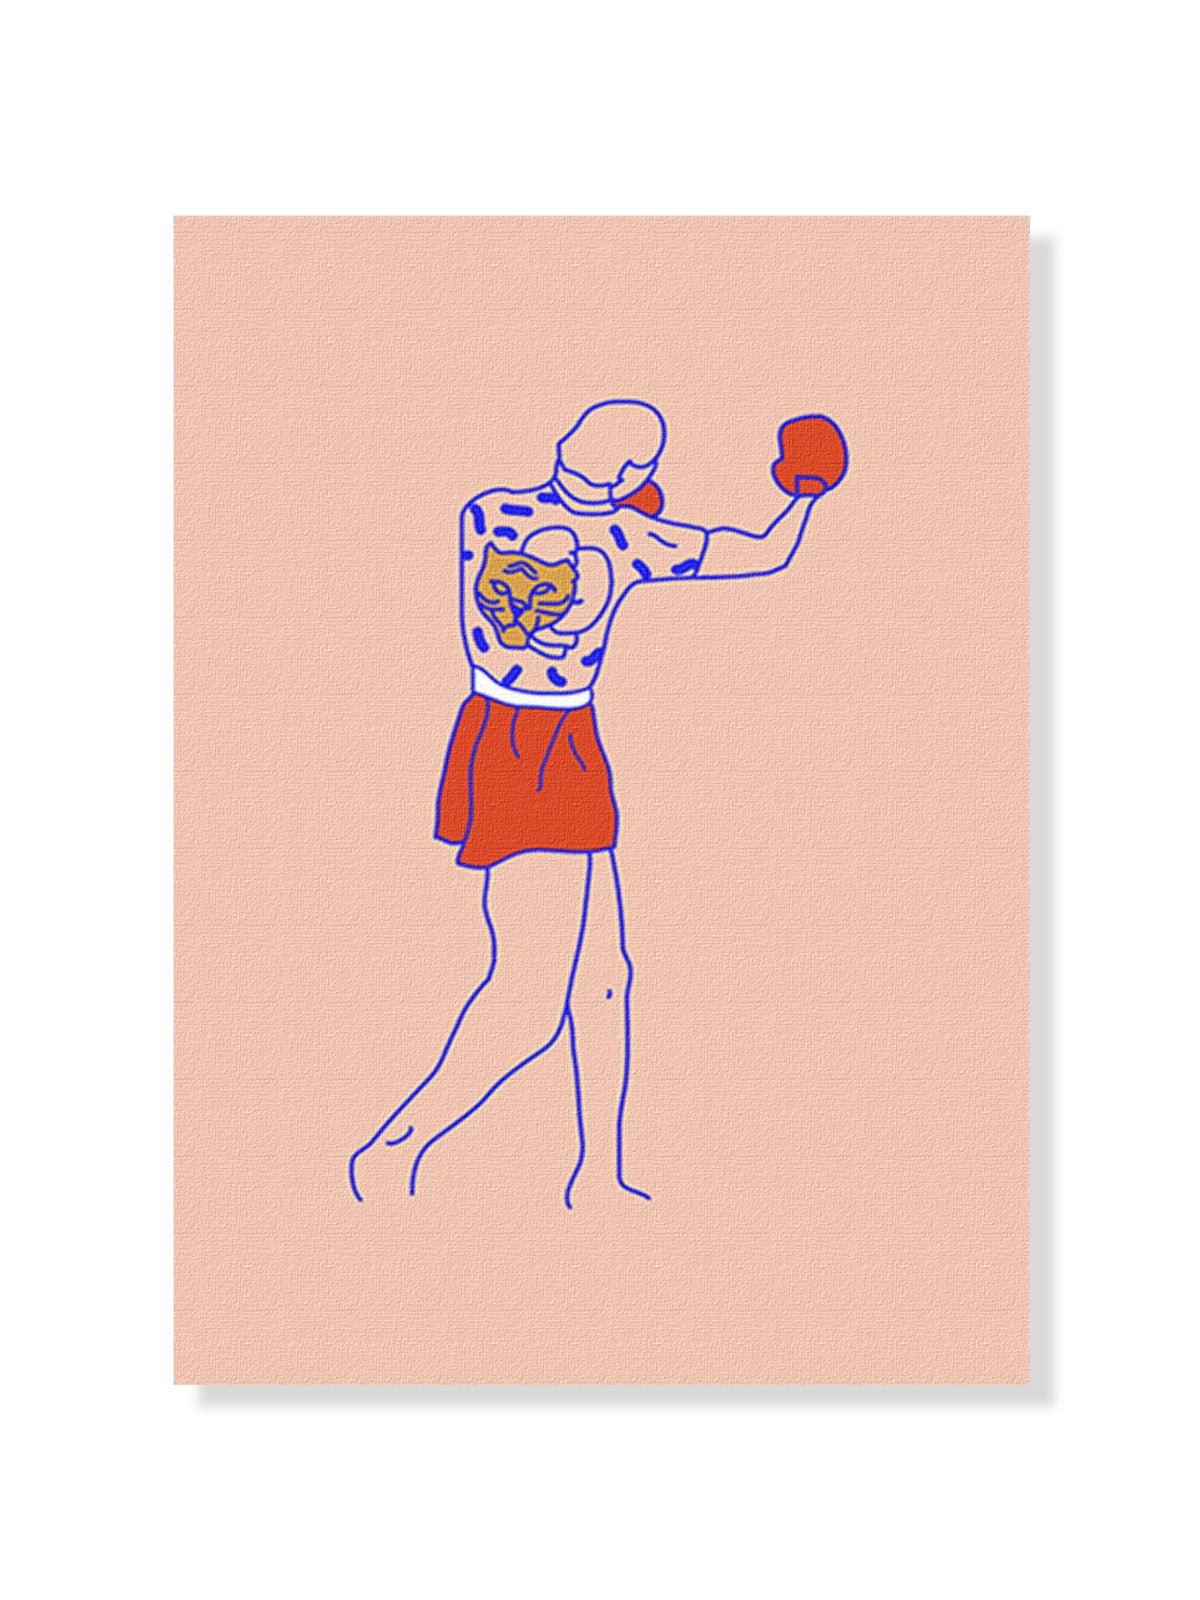 The Boxer - Una Lámina de Miki Lowe - Decora tu casa en Nomadart